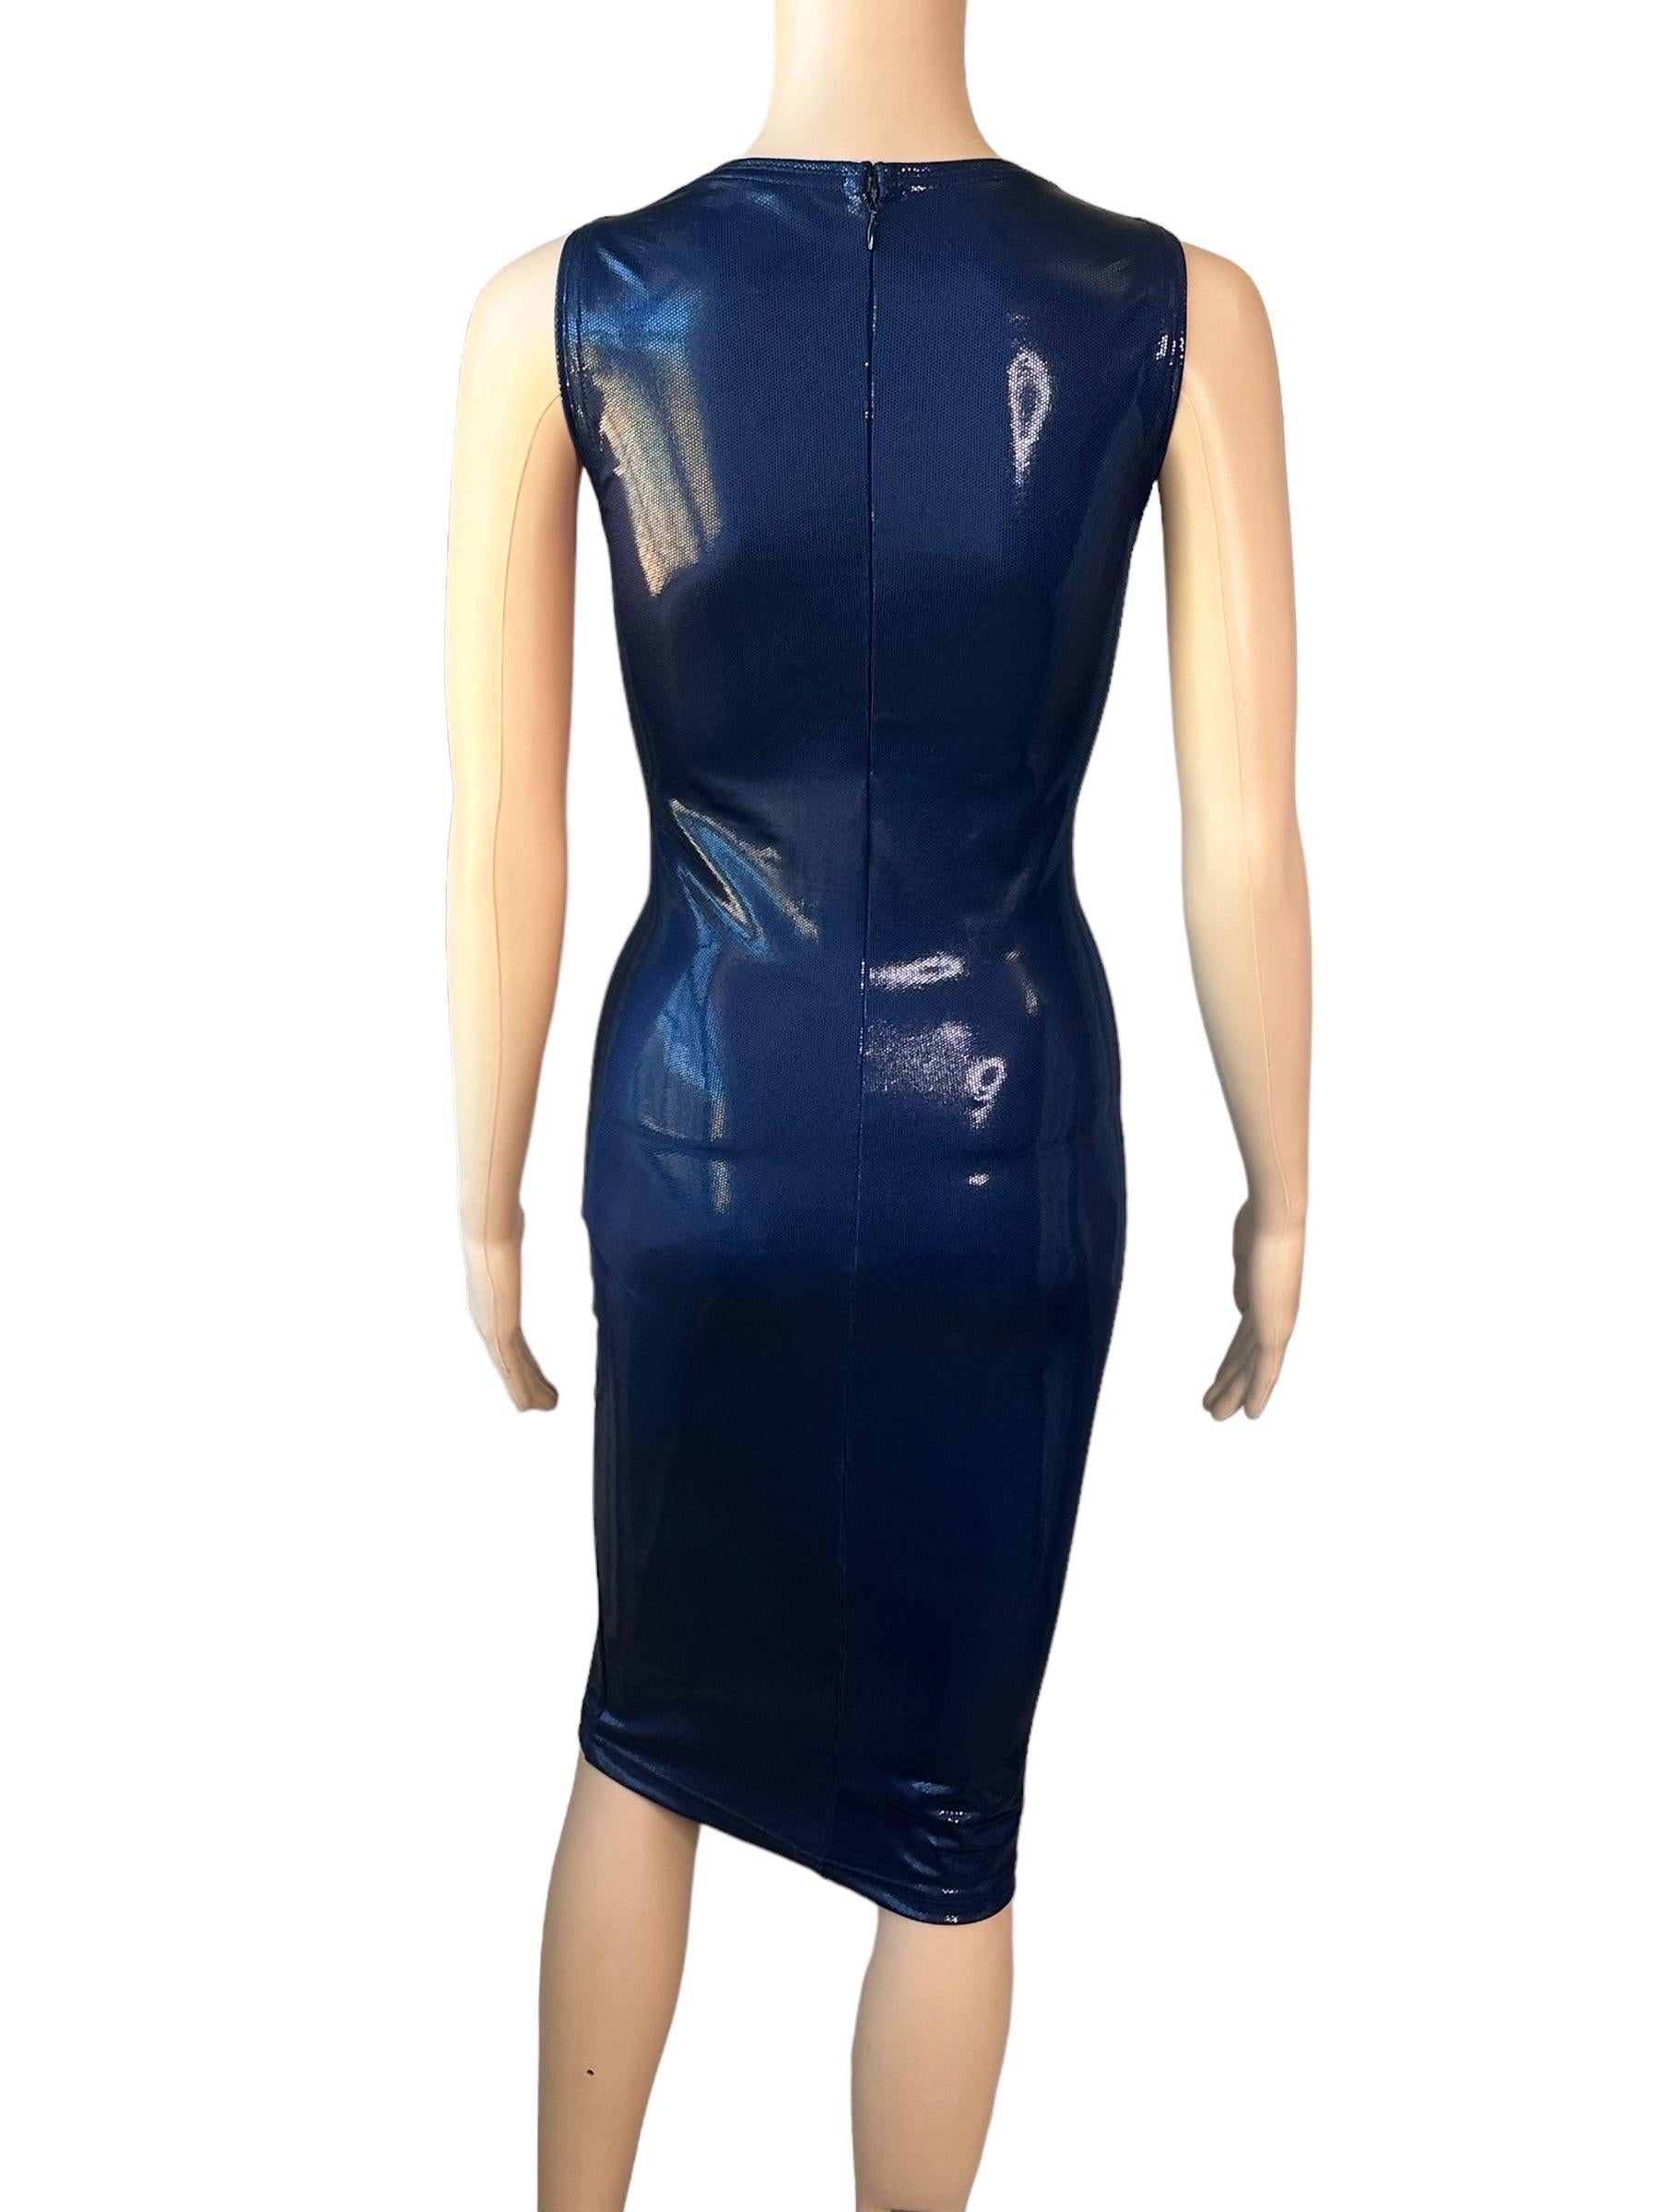 Gianni Versace c. 1994 Vintage Wet Look Stretch Bodycon Navy Blue Midi Dress 5